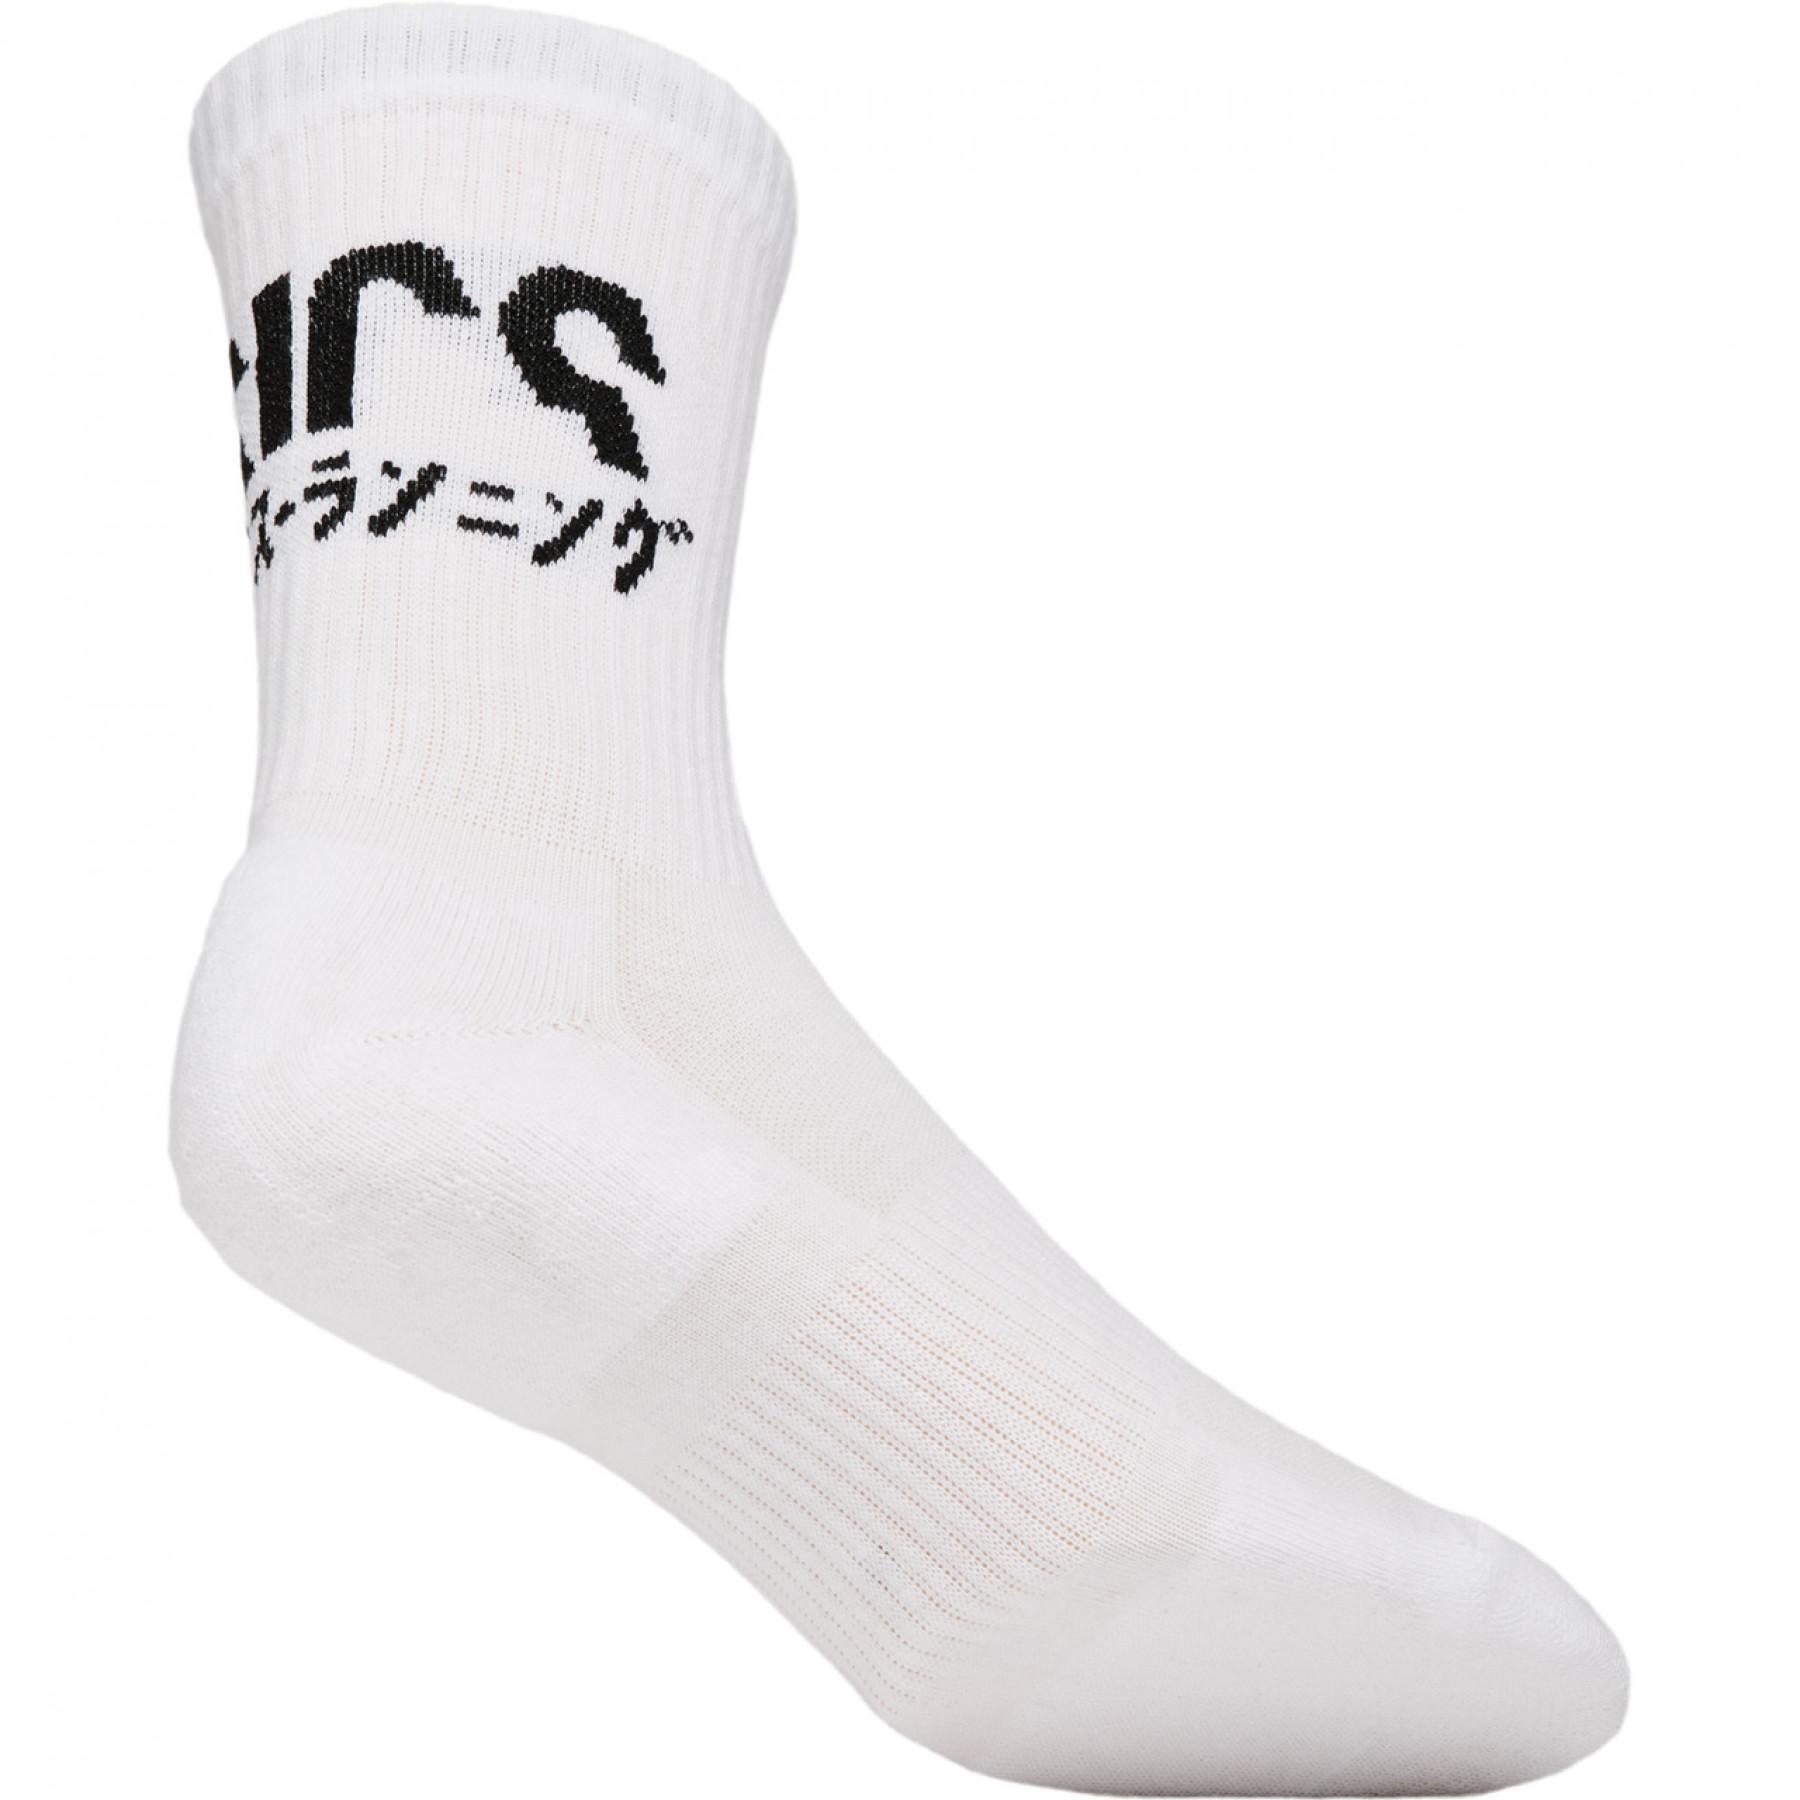 Socks Asics Katakana (2 paires)